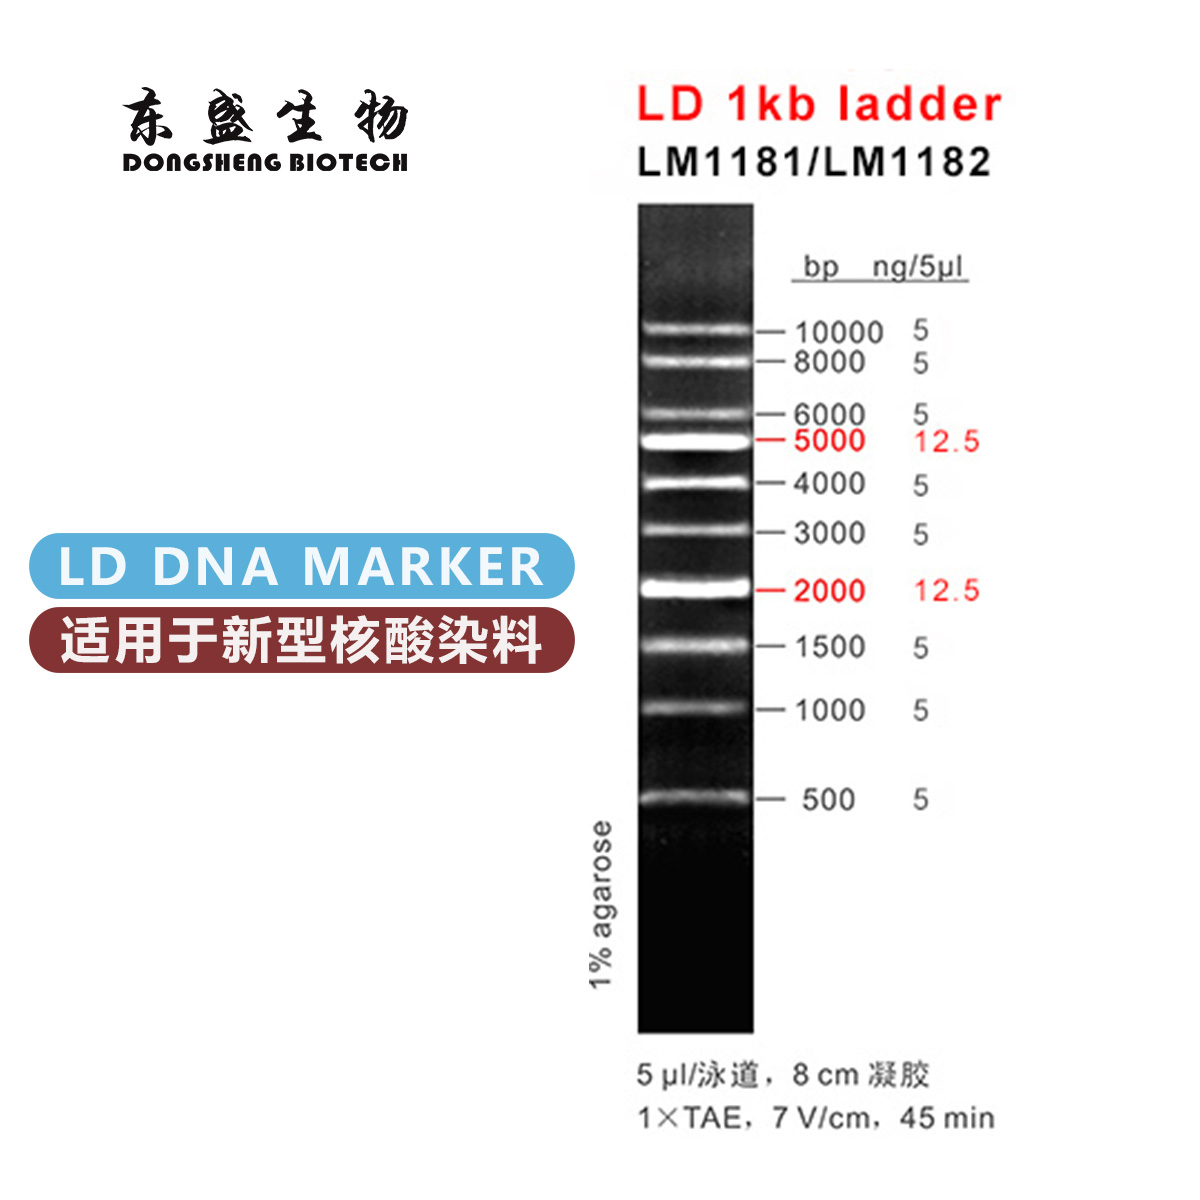 东盛LD 1kb ladder 新型染料专用DNA Marker (LM1181-LM1182)